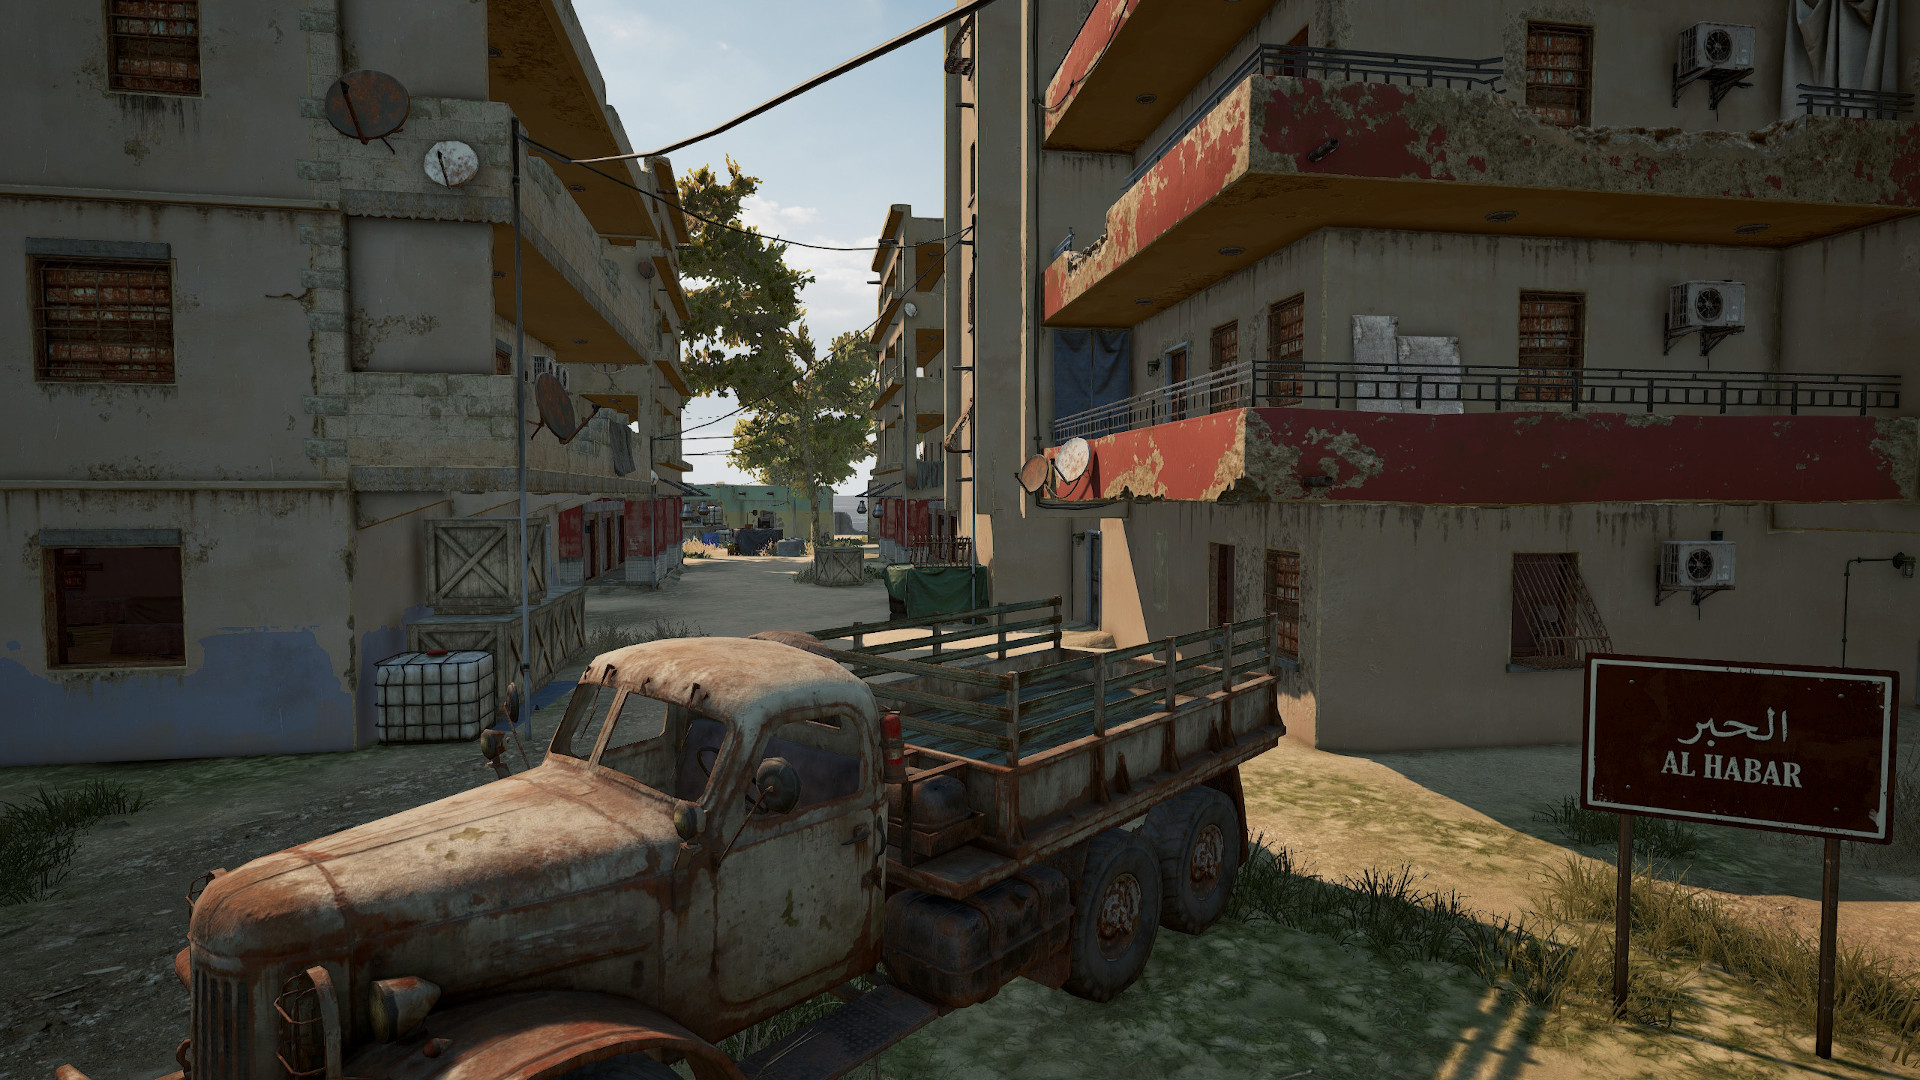 Best PUBG Karakin drops: Al Habar, with a rusty truck next to two tall apartment buildings.